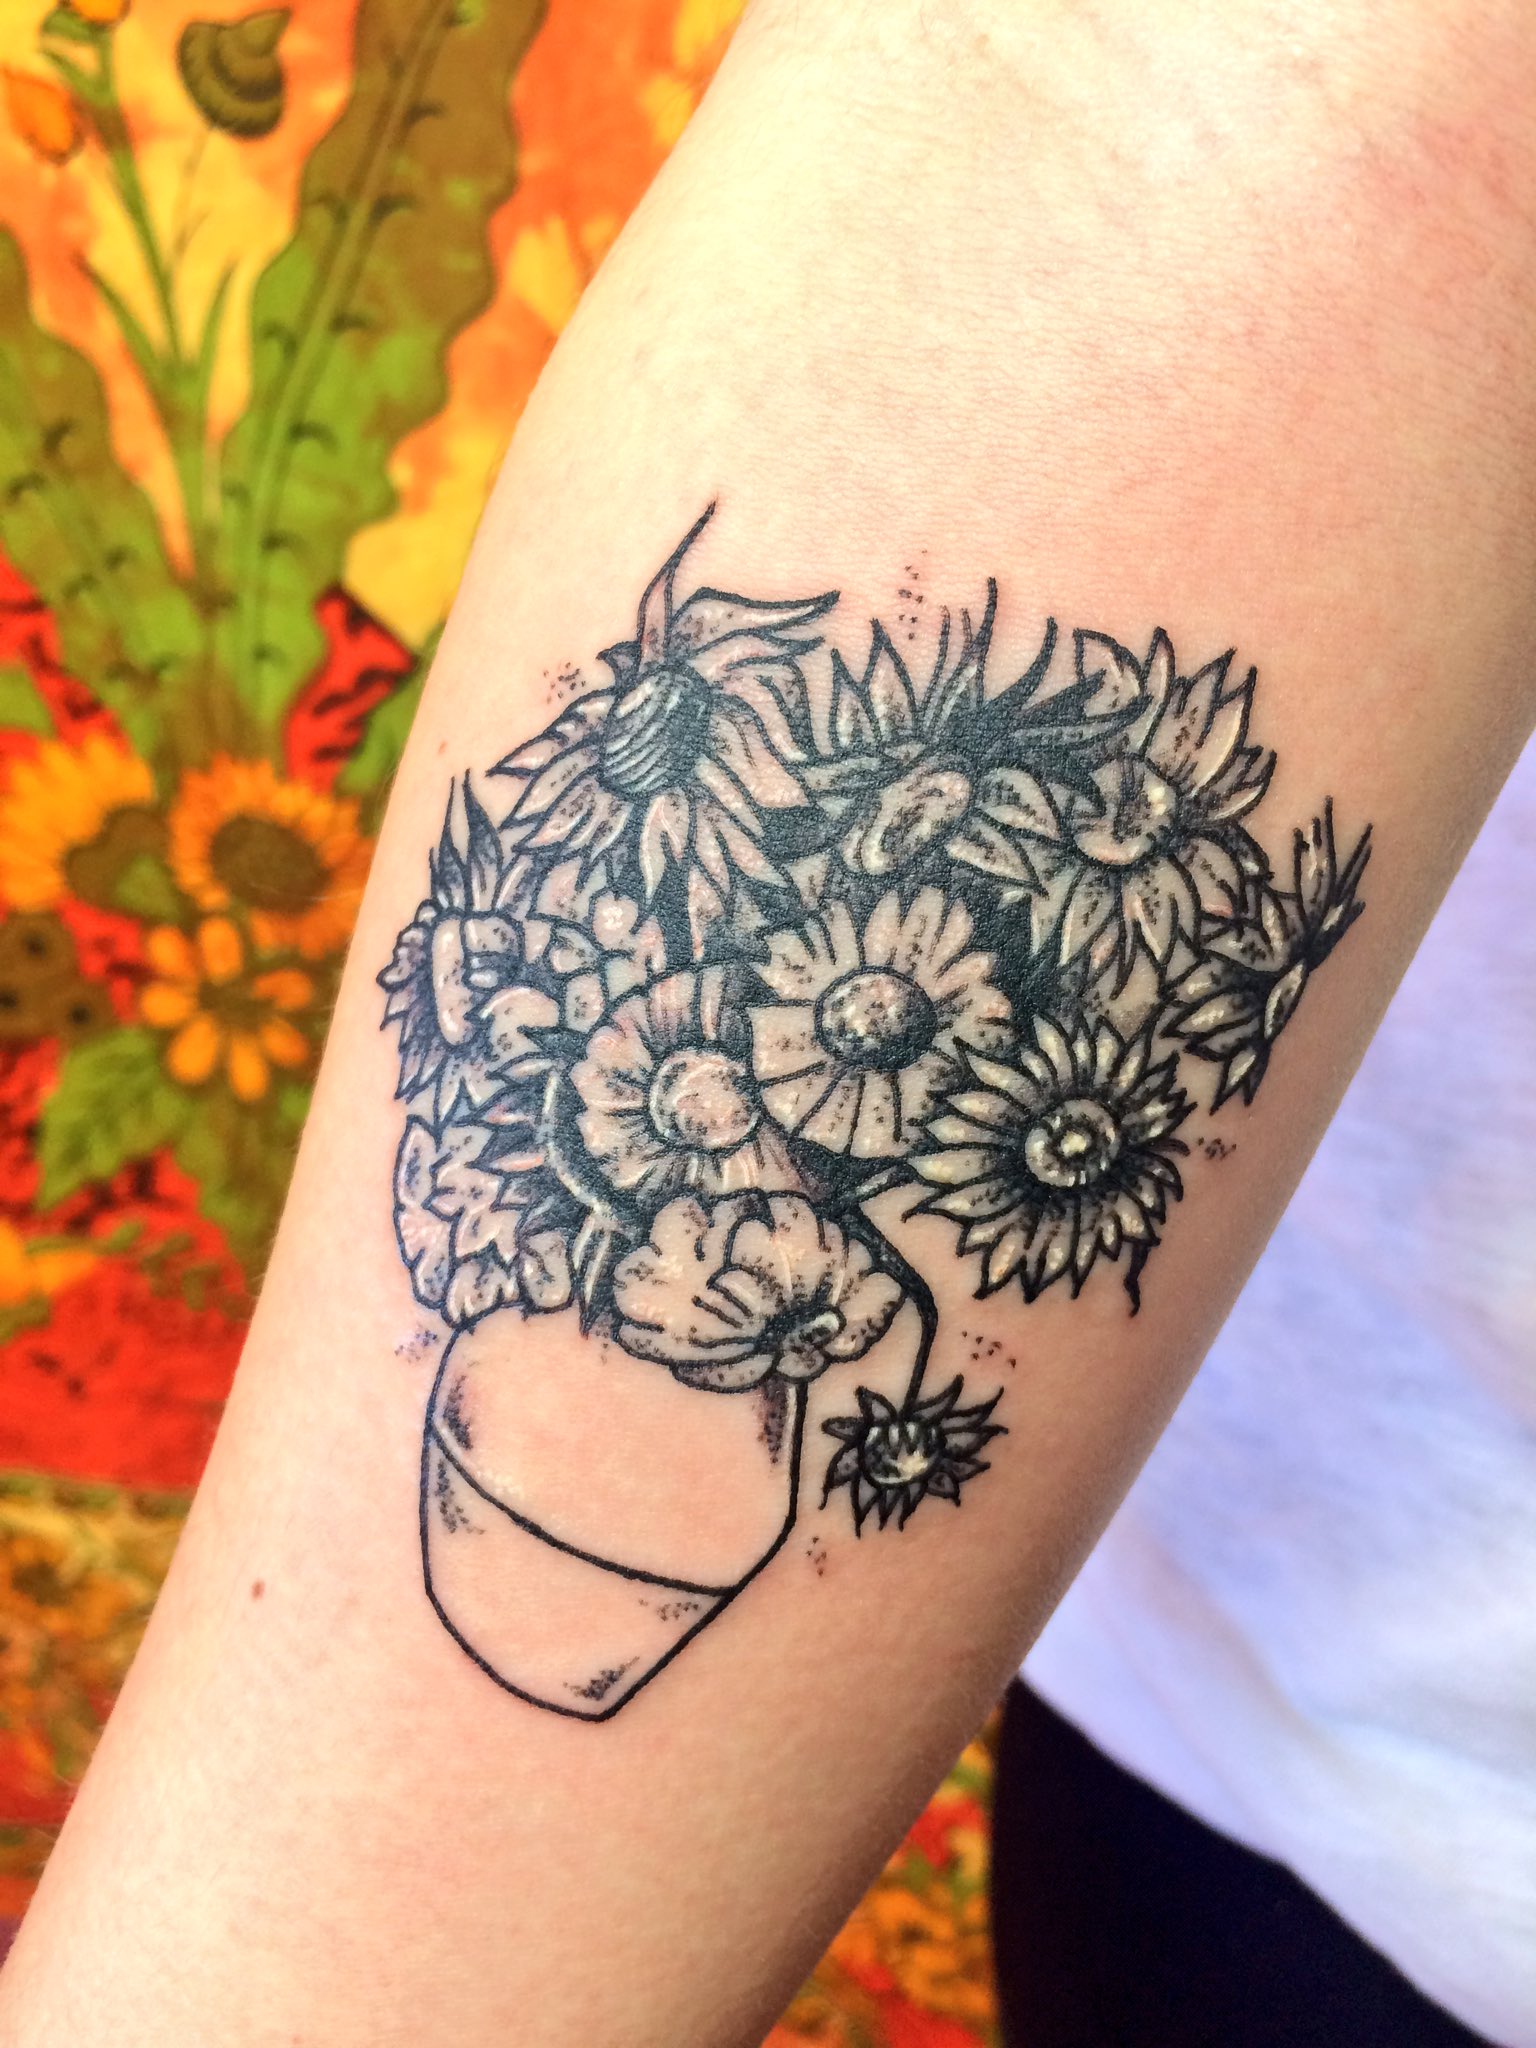 Celeste Vera Tattoo on X: "Tatuaje de los girasoles de van gogh y rosa lineal de buena mañana :) https://t.co/00BDGv5YVk" / X